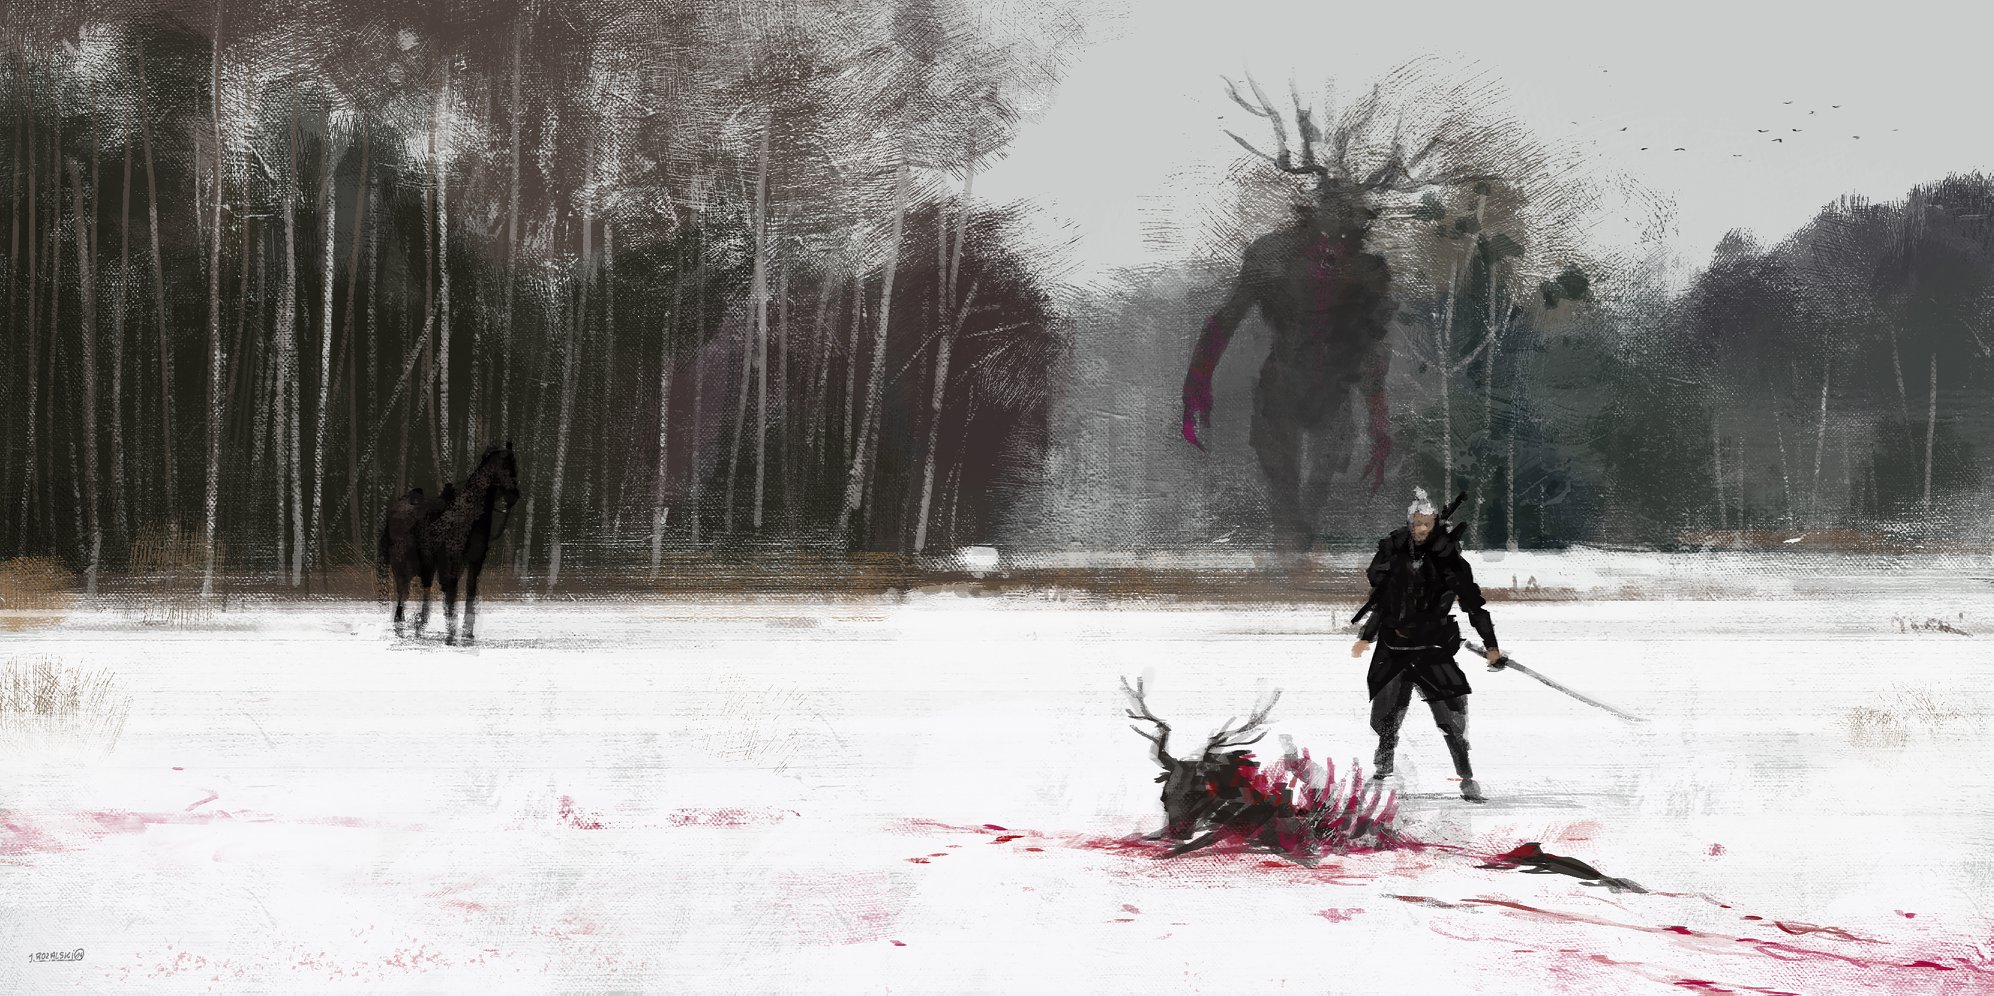 General 1994x996 snow forest creature warrior blood corpse sword Jakub Różalski The Witcher The Witcher 3: Wild Hunt video game art digital art